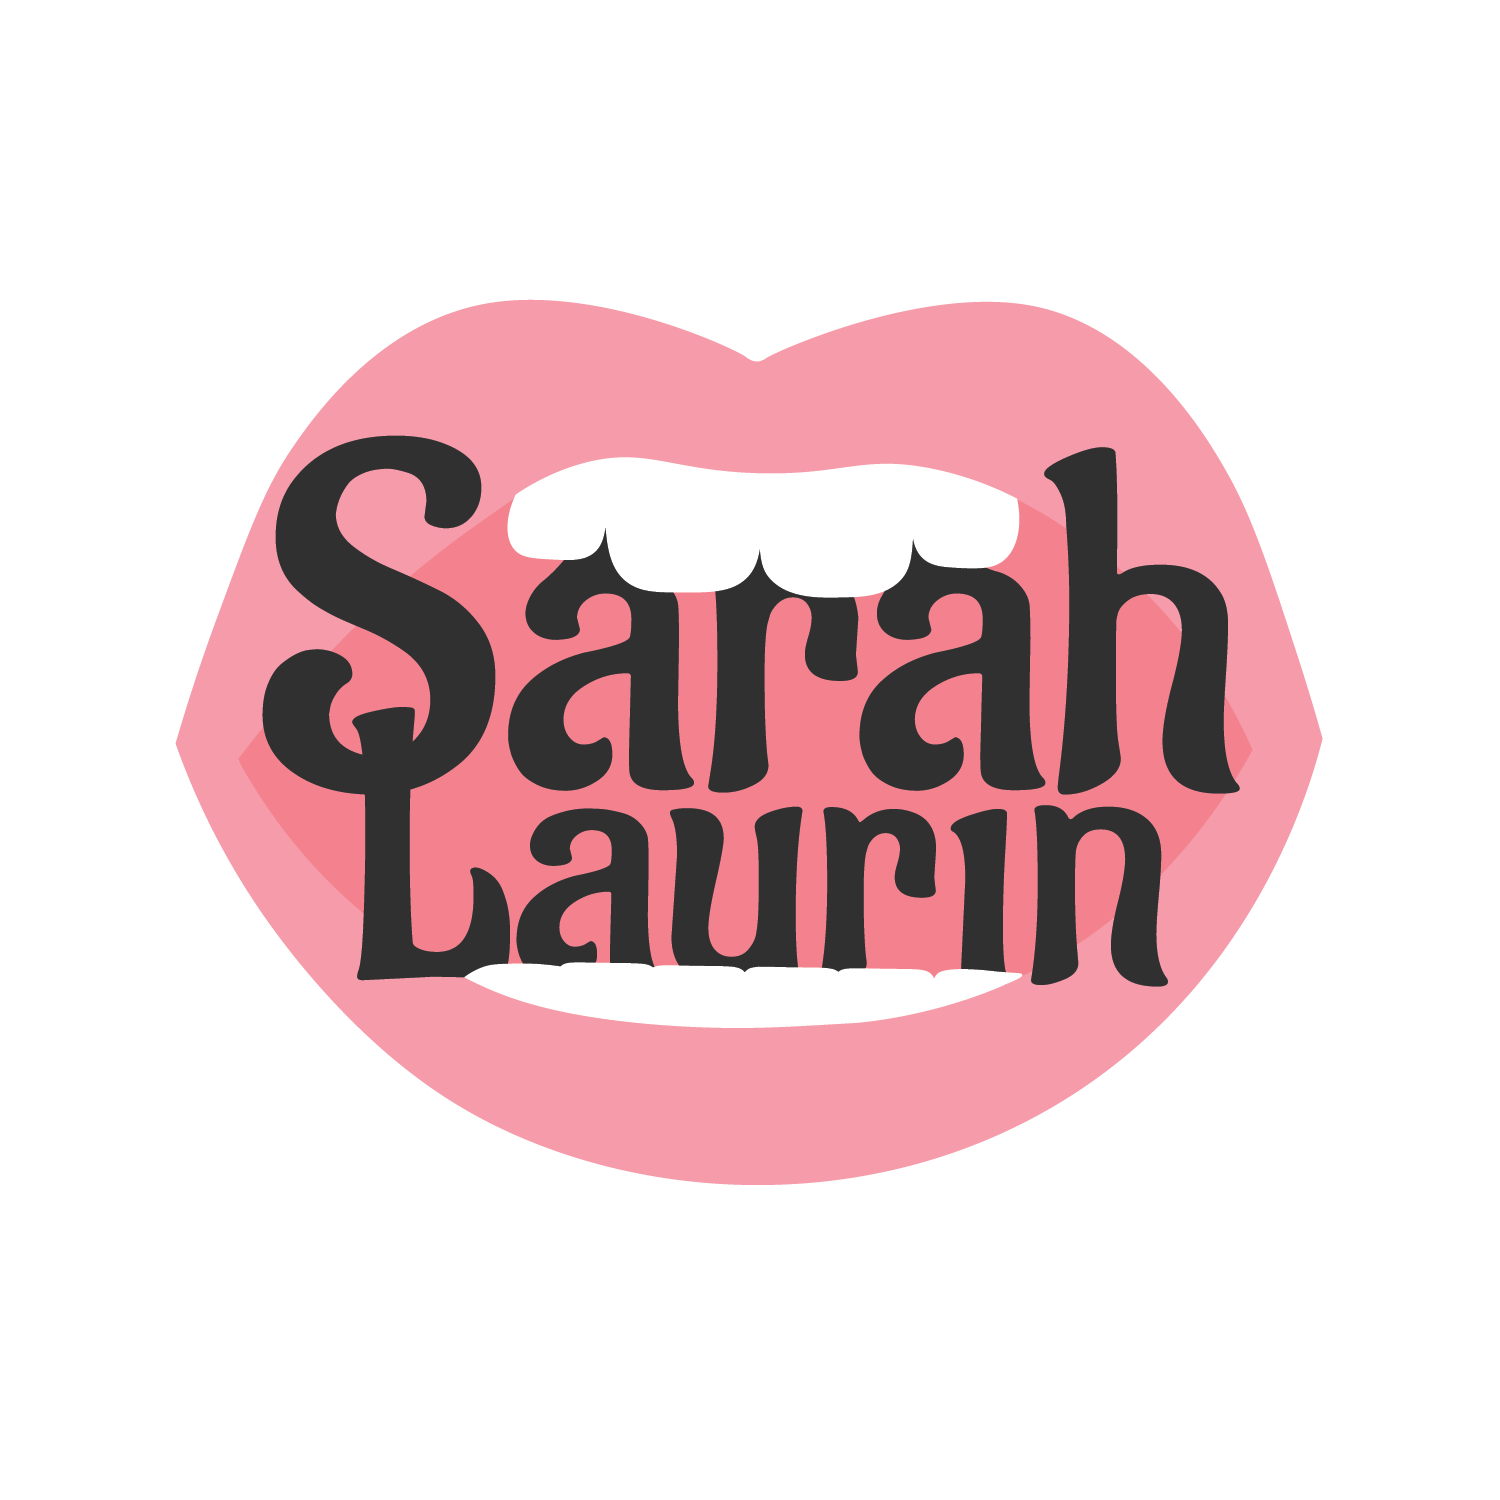 Sarah Laurin Creative